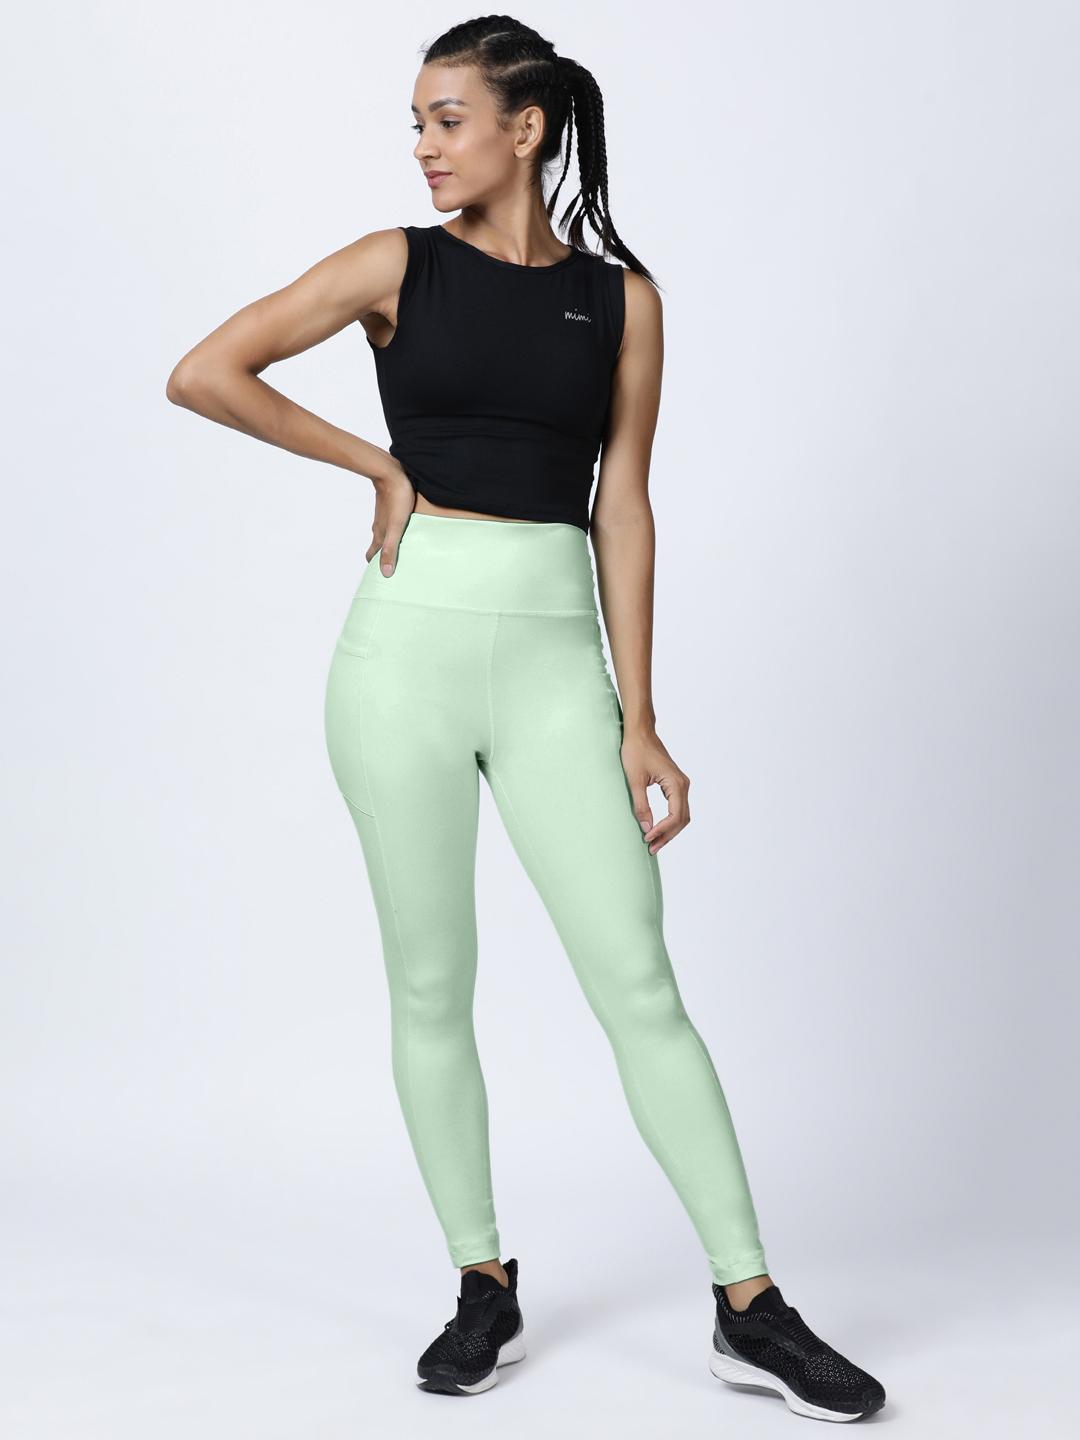 Stash Me In Back Zipper leggings for Women – Mint Green – MICHELLE SALINS